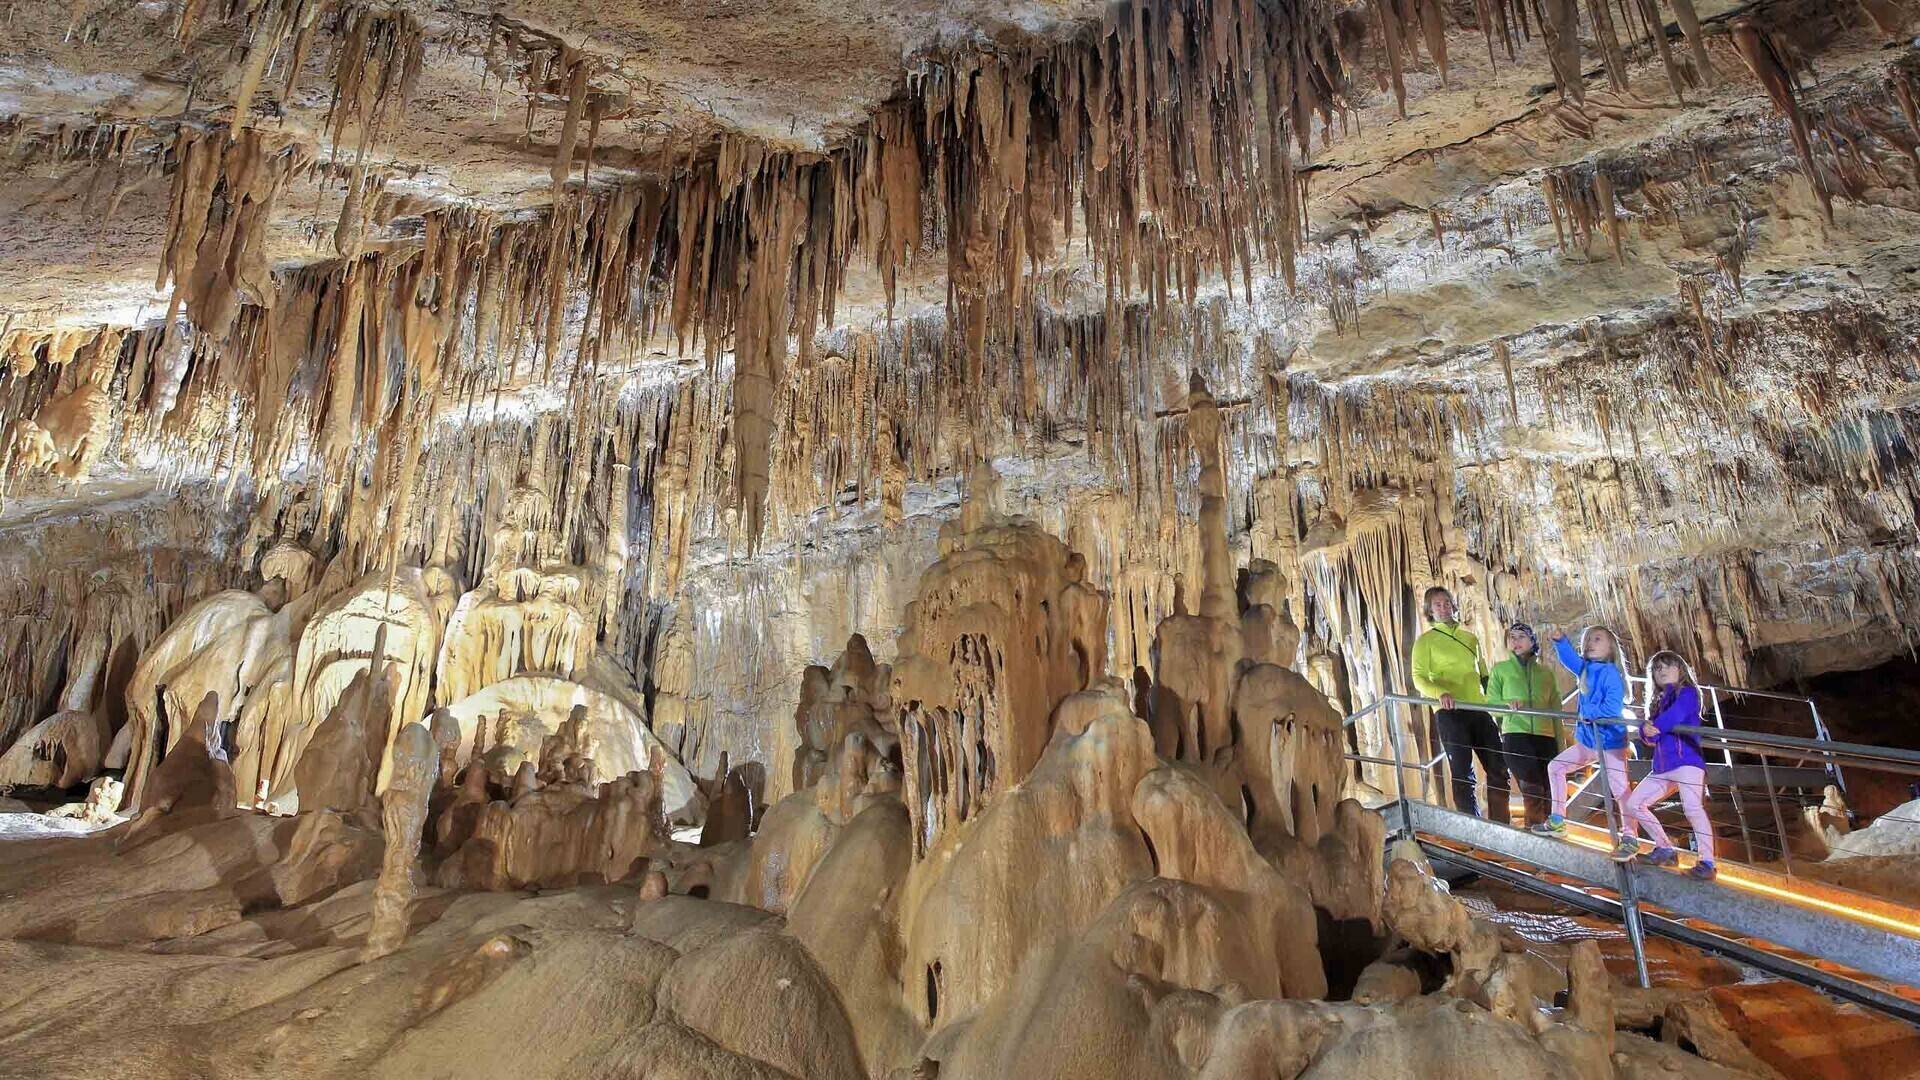 Mendukilo Cave guided tour